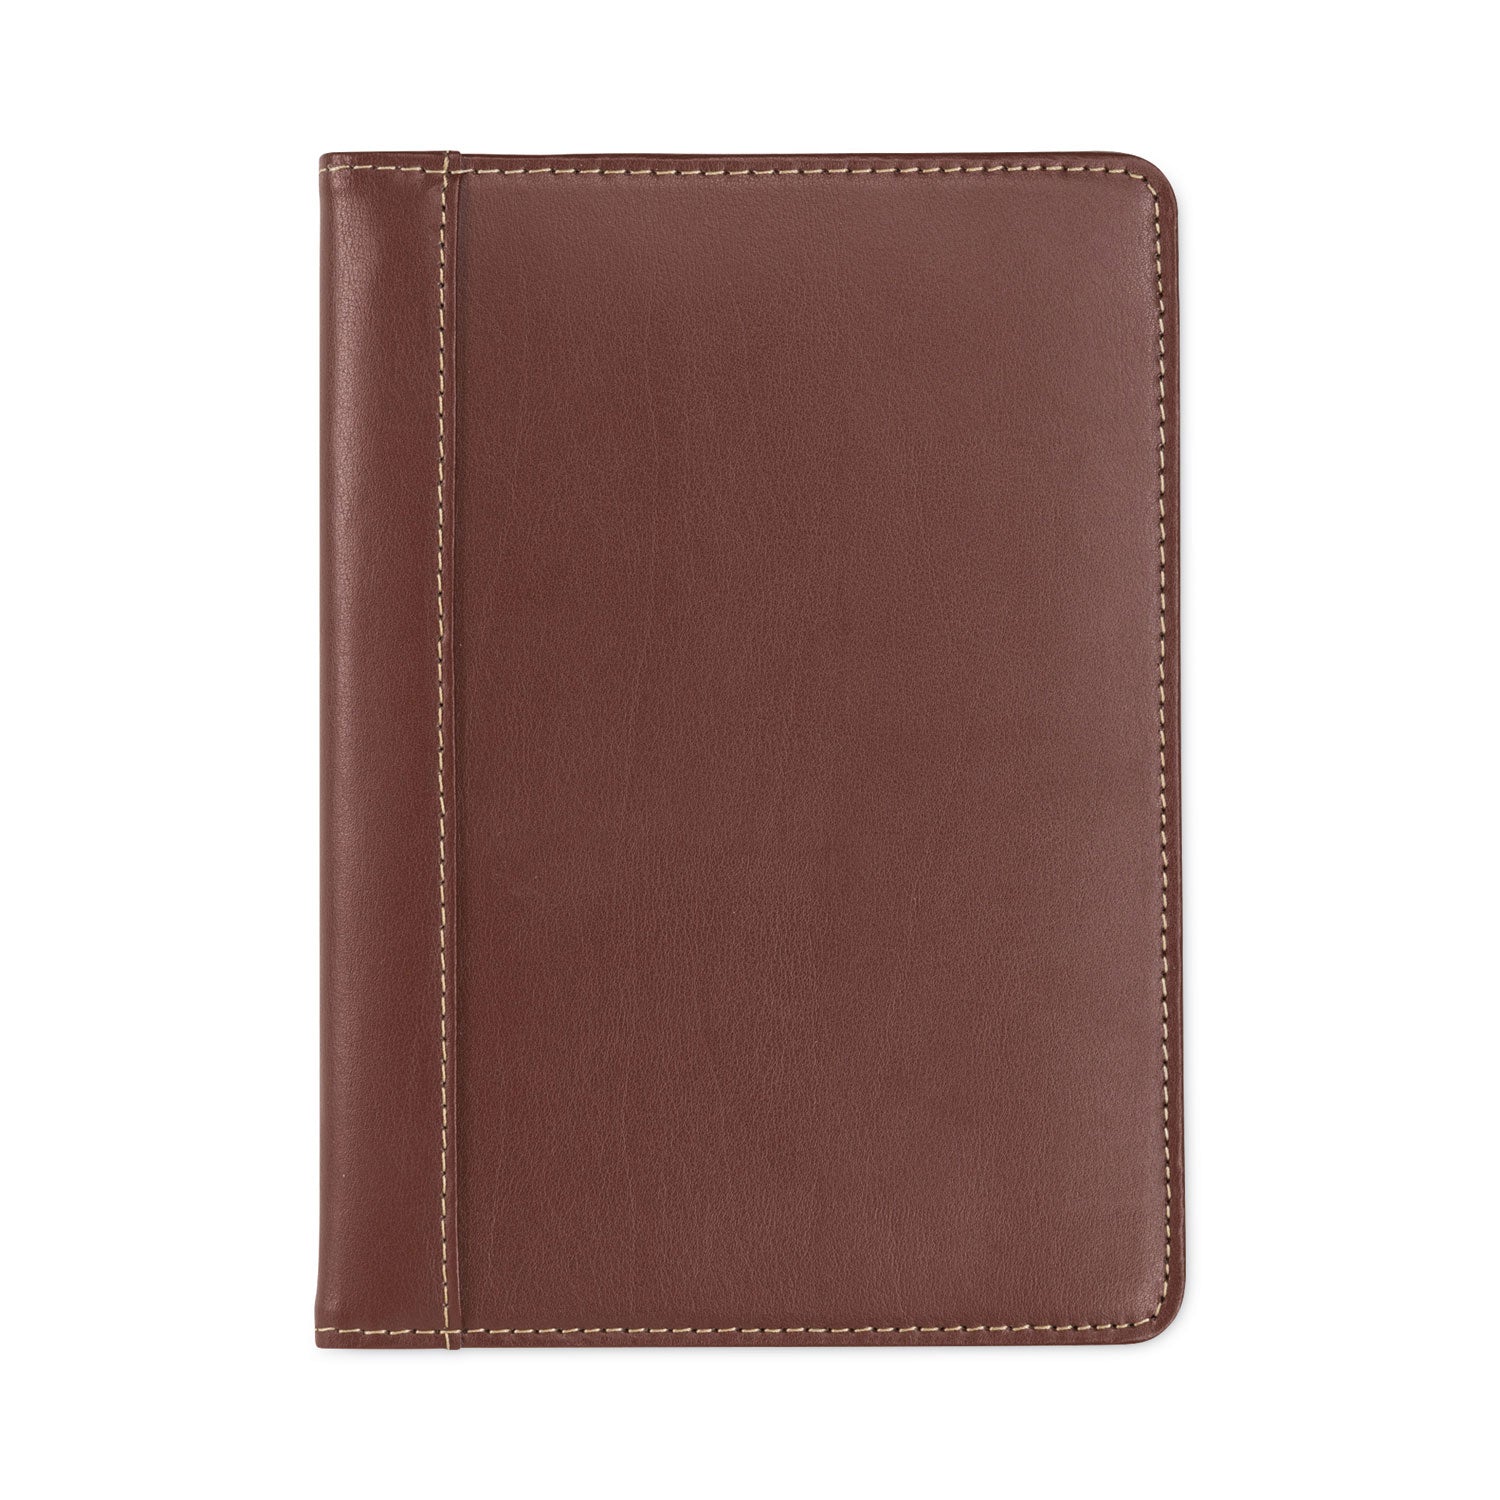 contrast-stitch-leather-padfolio-625w-x-875h-open-style-brown_sam71736 - 1